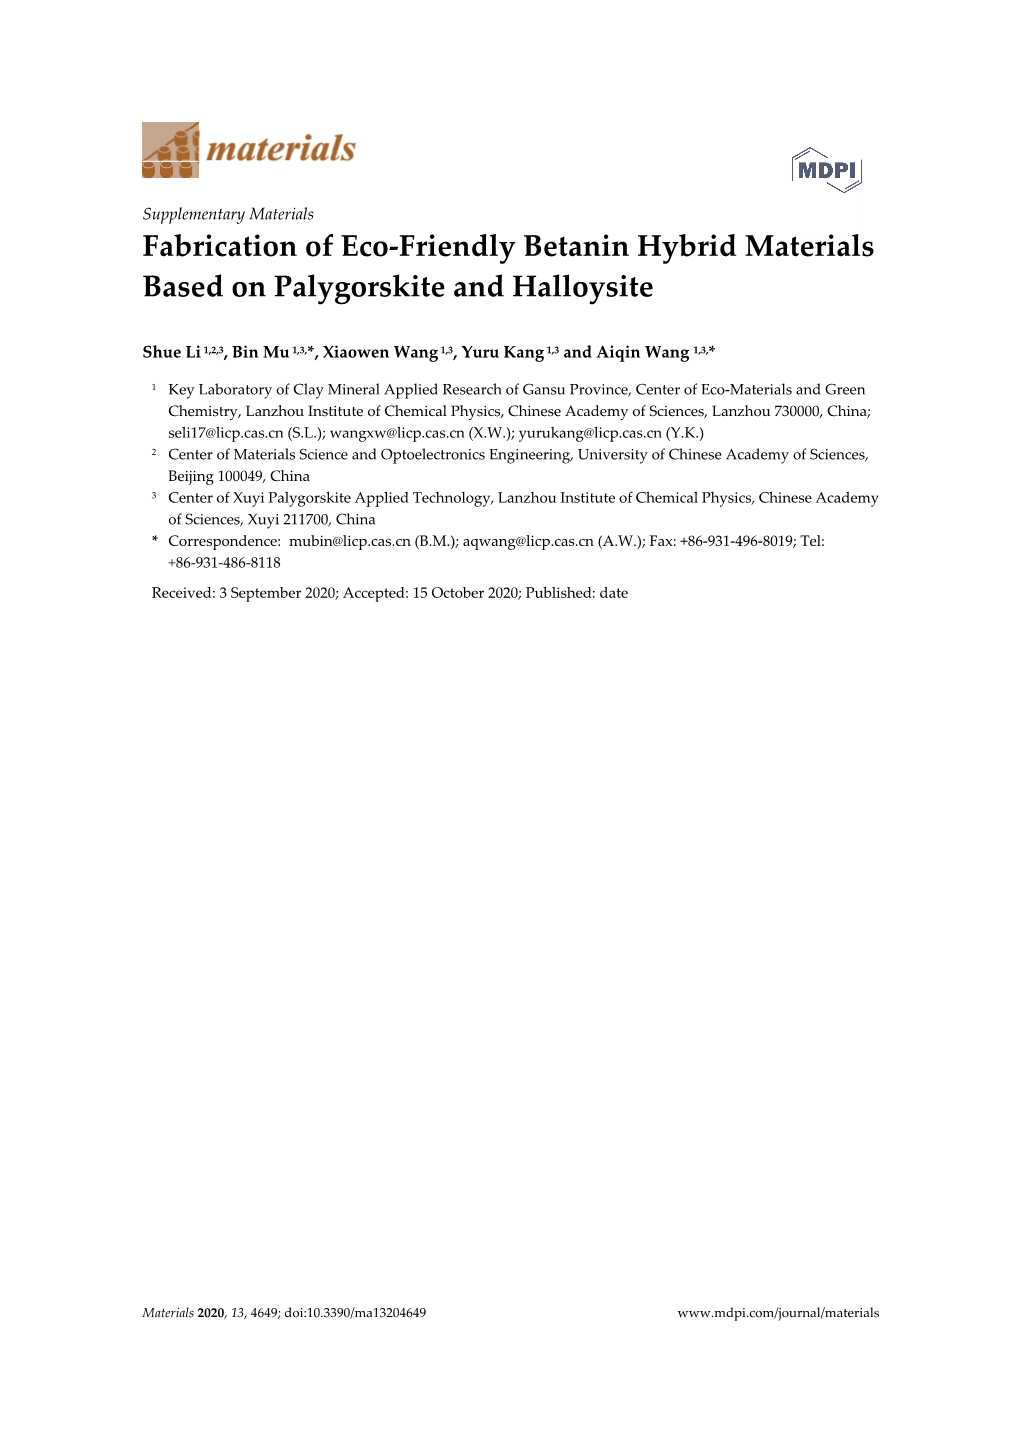 Fabrication of Eco-Friendly Betanin Hybrid Materials Based on Palygorskite and Halloysite